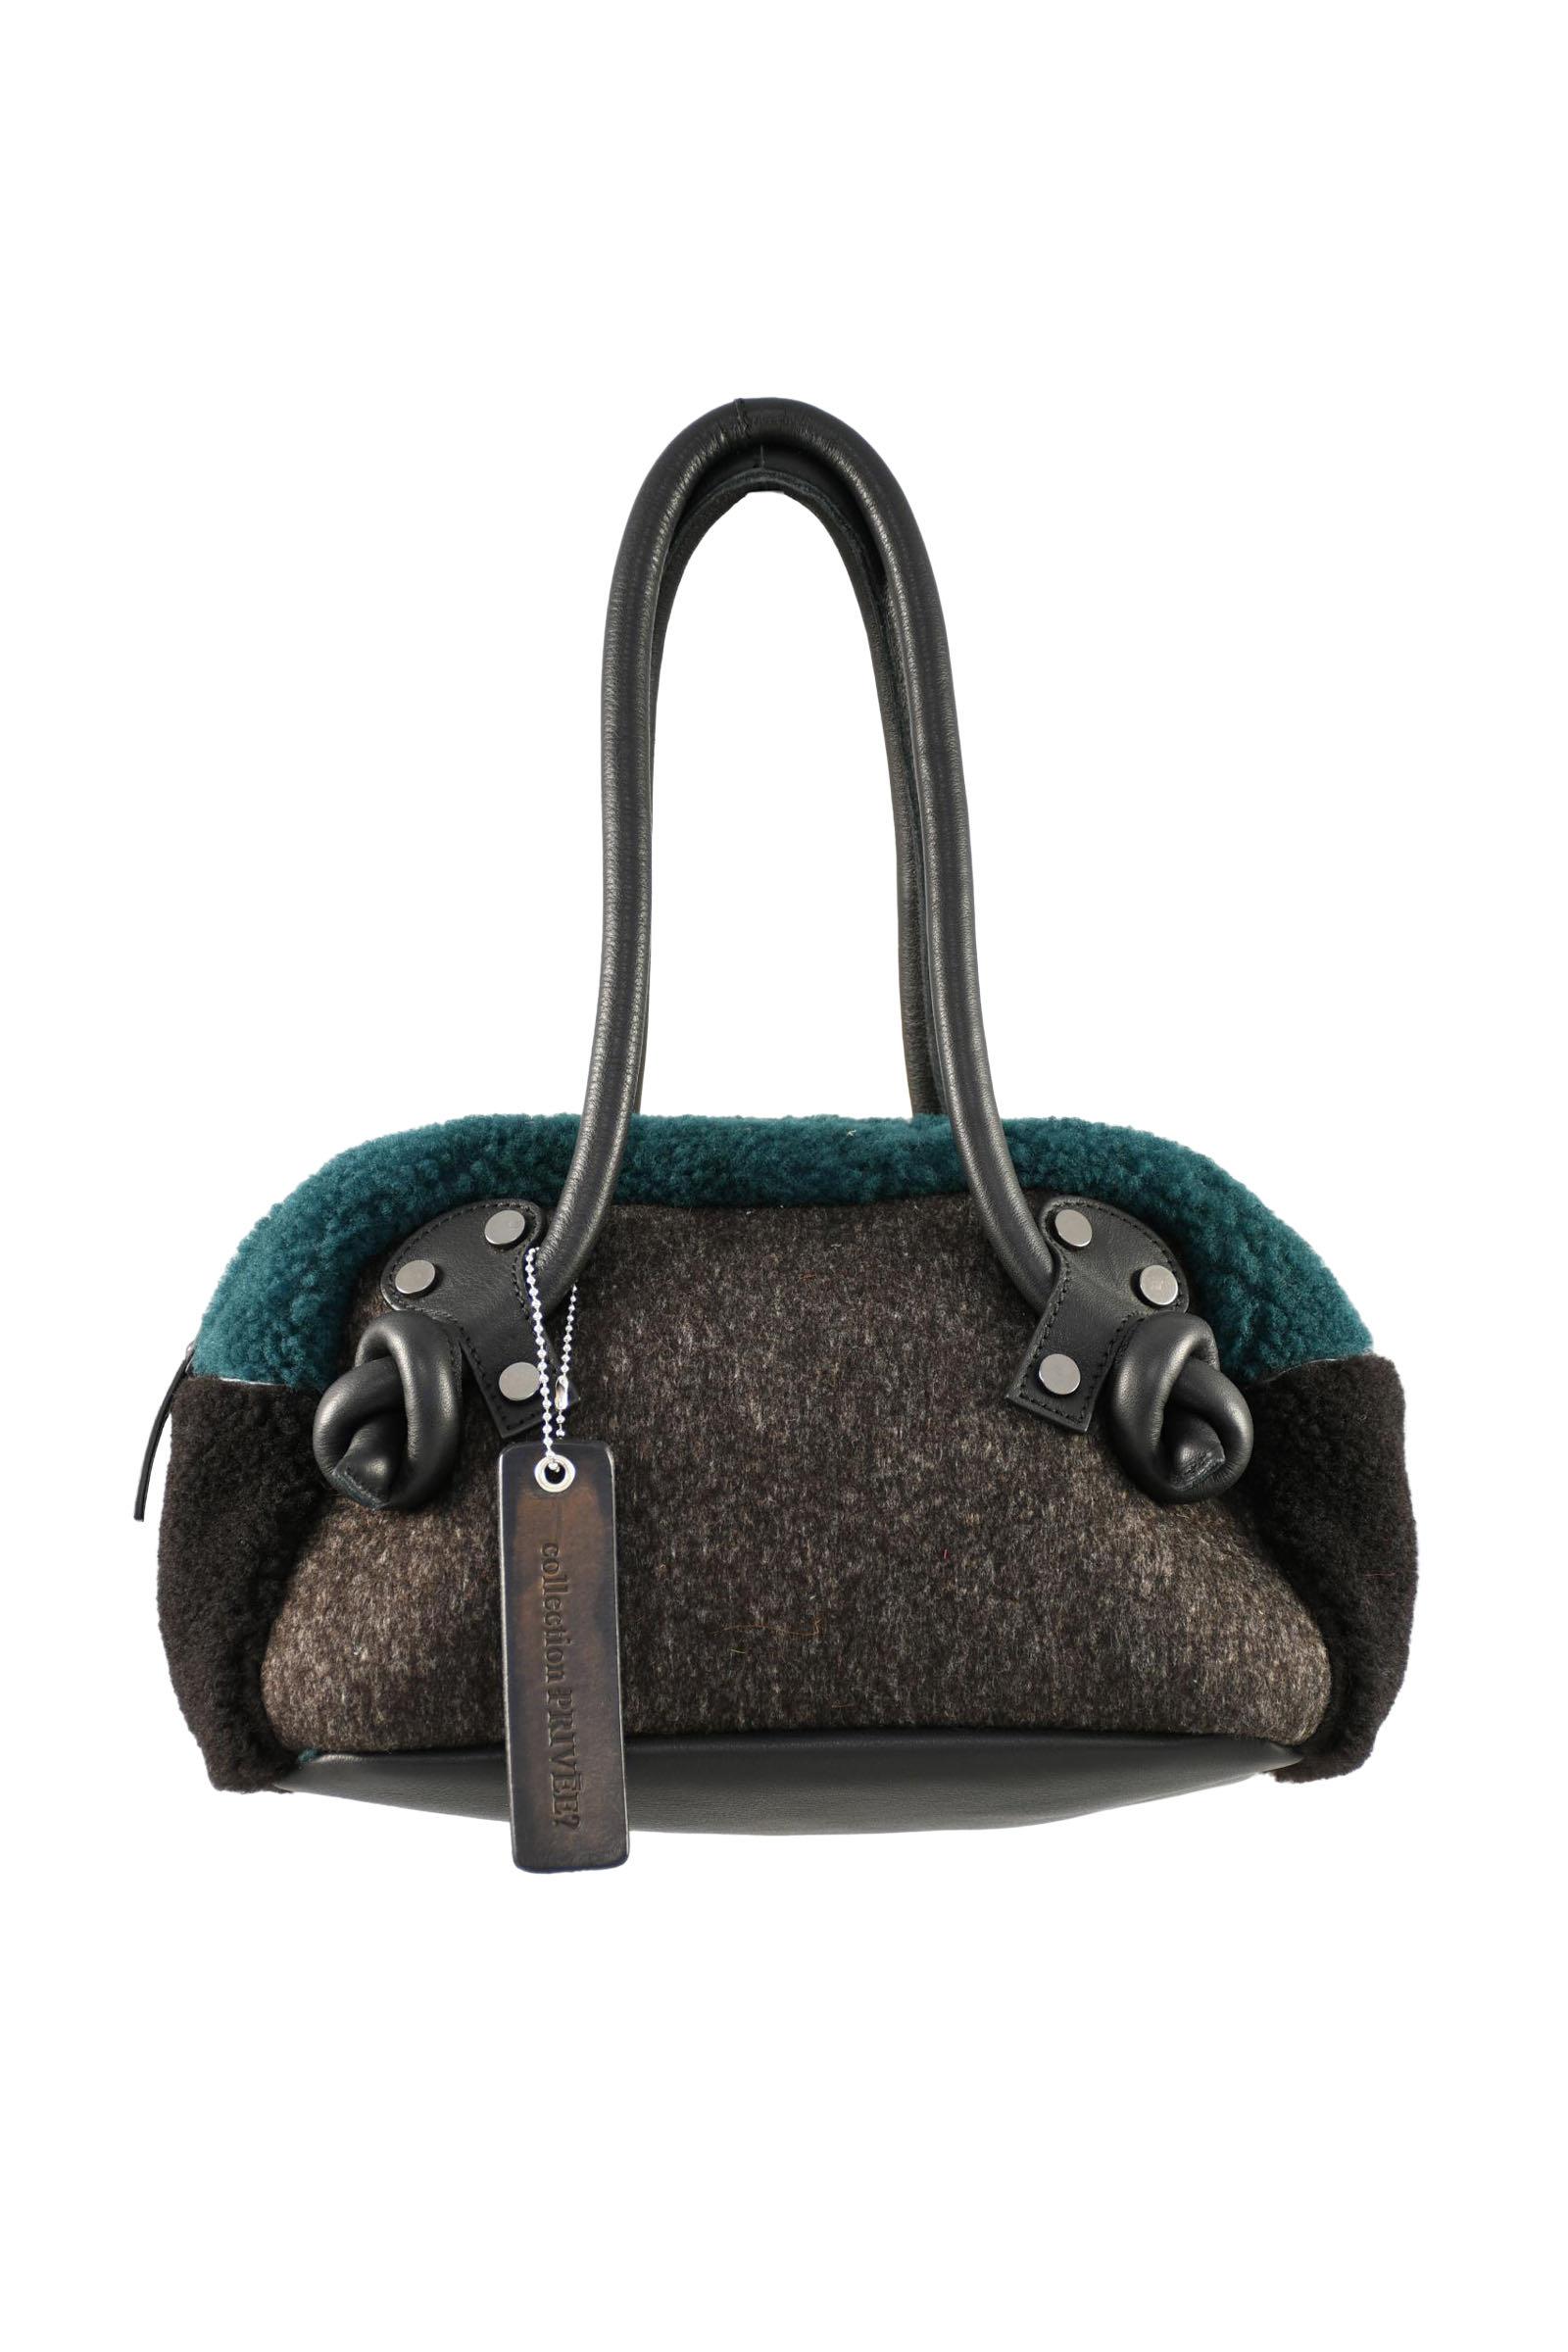 Collection Privee Women's Dark Brown Handbag